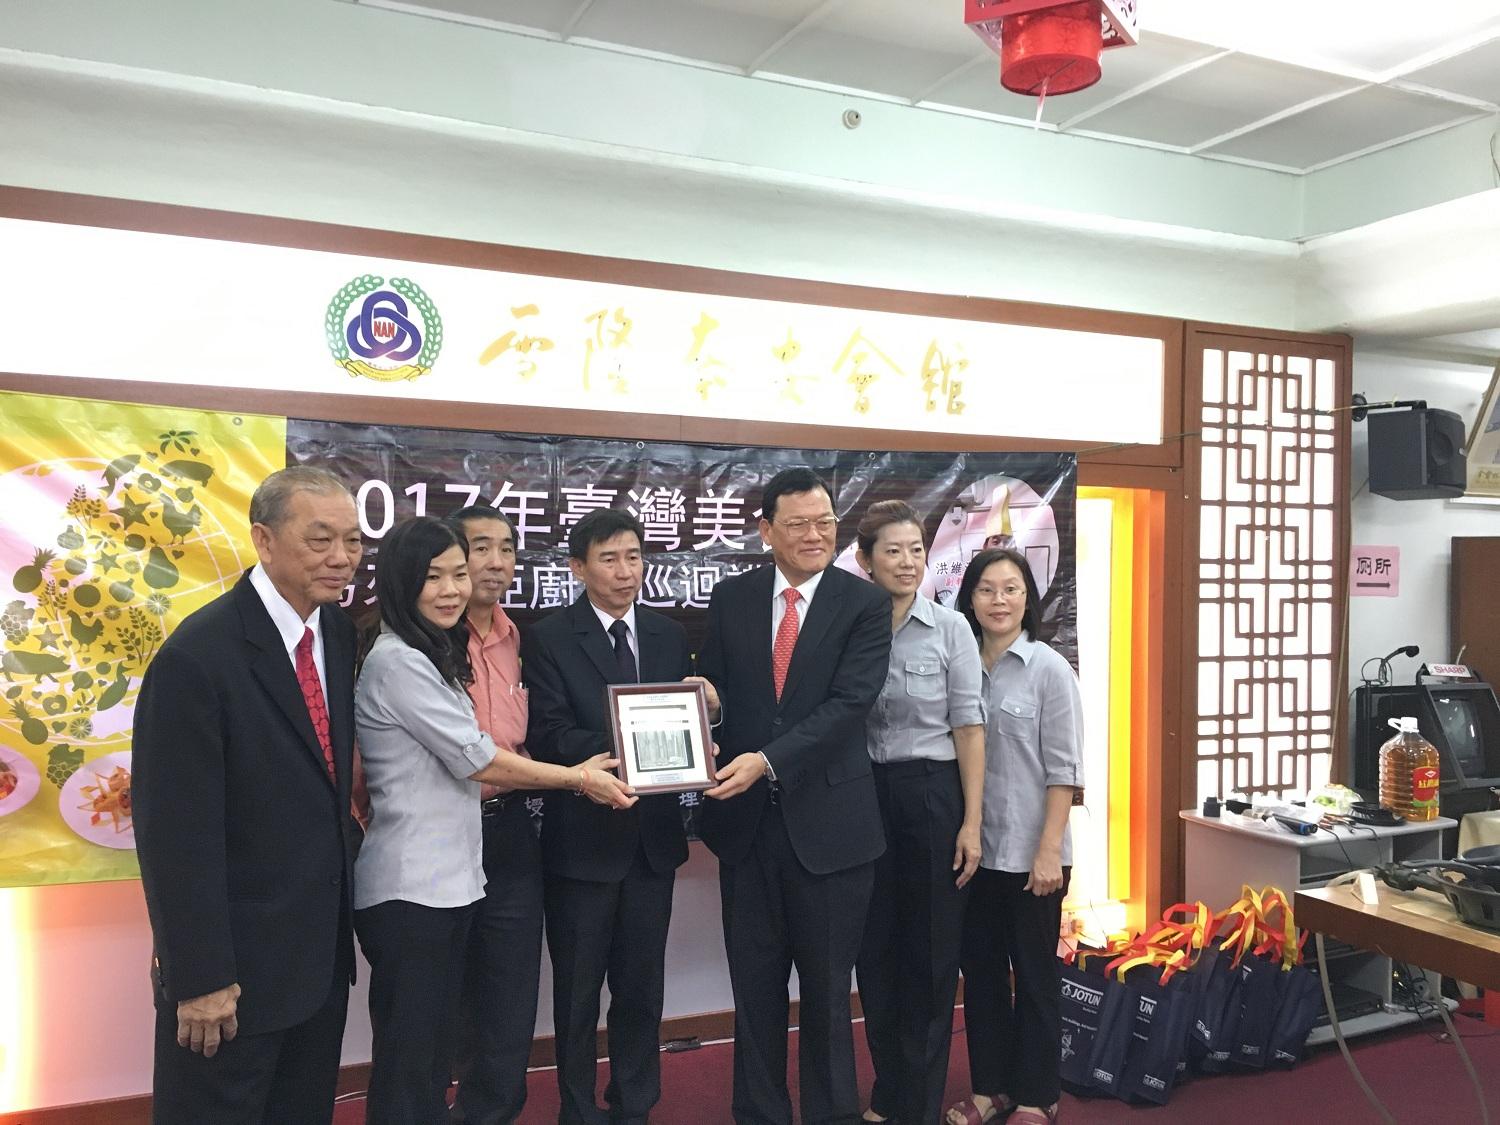 Wakil Chang, James Chi-ping (kanan tiga)  menghadiri Malaysia  2017 Tour Of Taiwan Gourmet Cuisines Majlis Perasmian Ceremonial dan  President Kang Beng Hooi (kiri empat) mengambil gambar dengan  memenangi pelajar.
